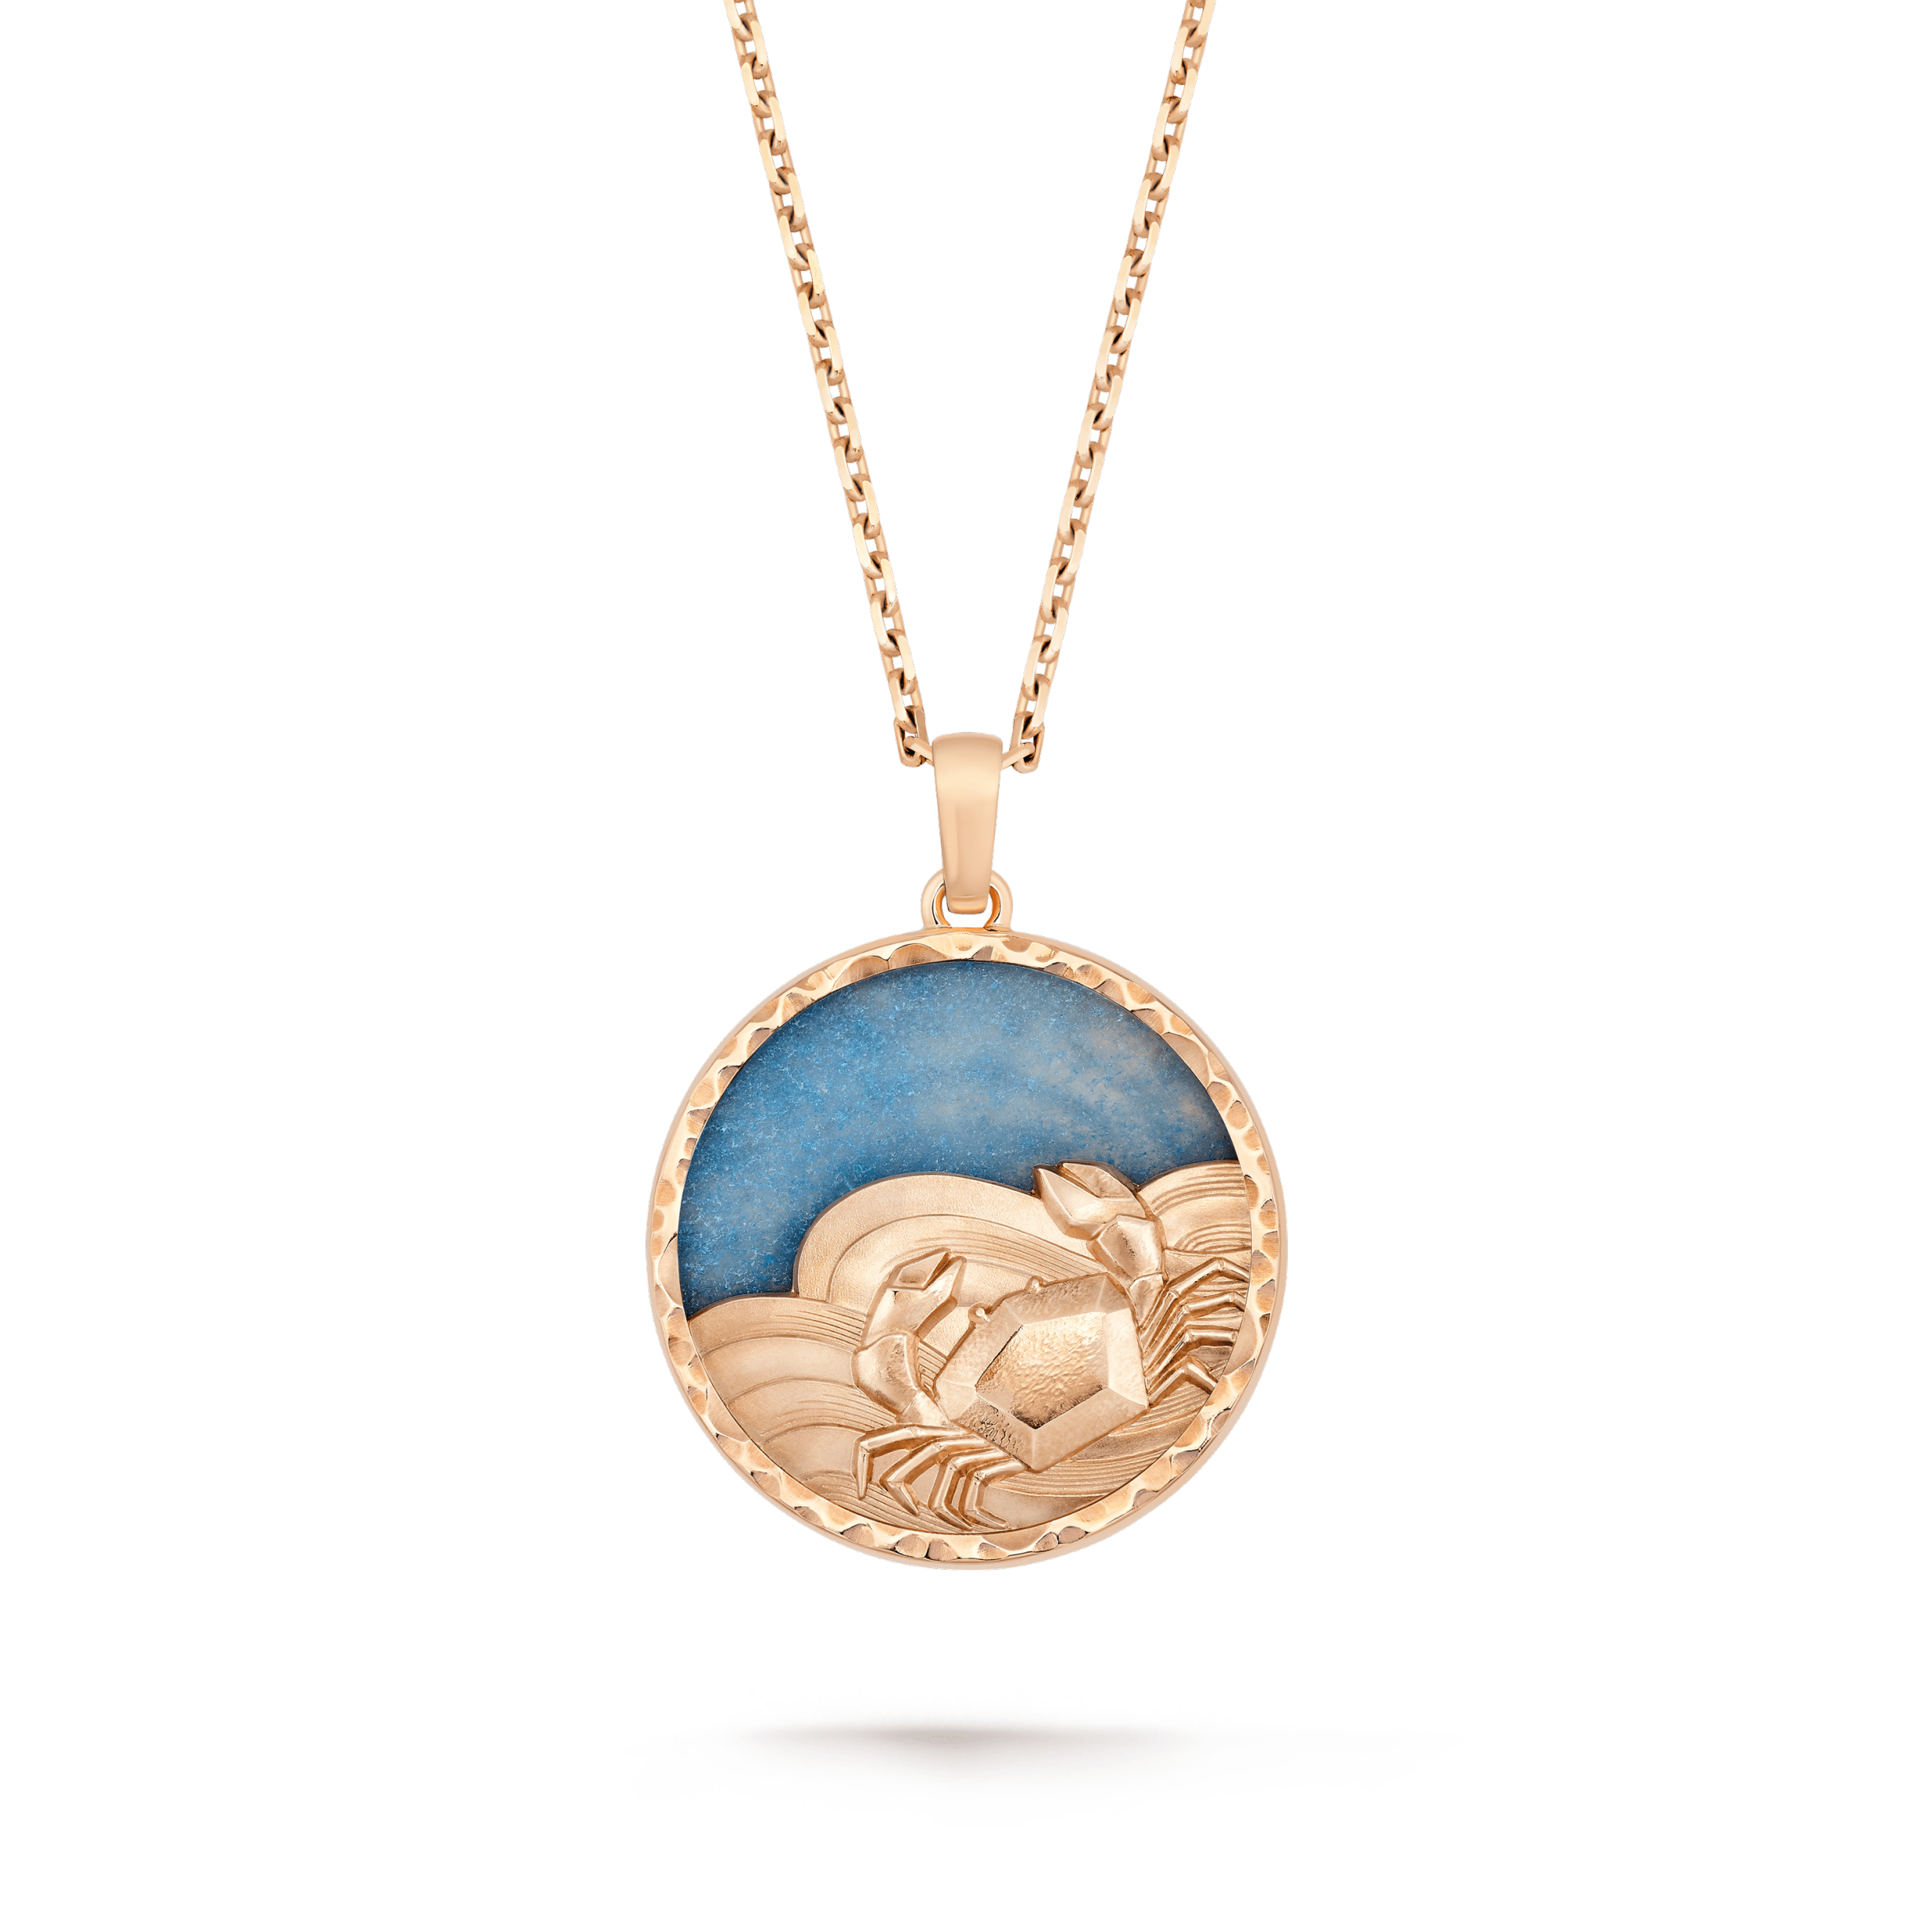 Zodiaque Long Necklace Cancri (Cancer) Rose gold, Quartz